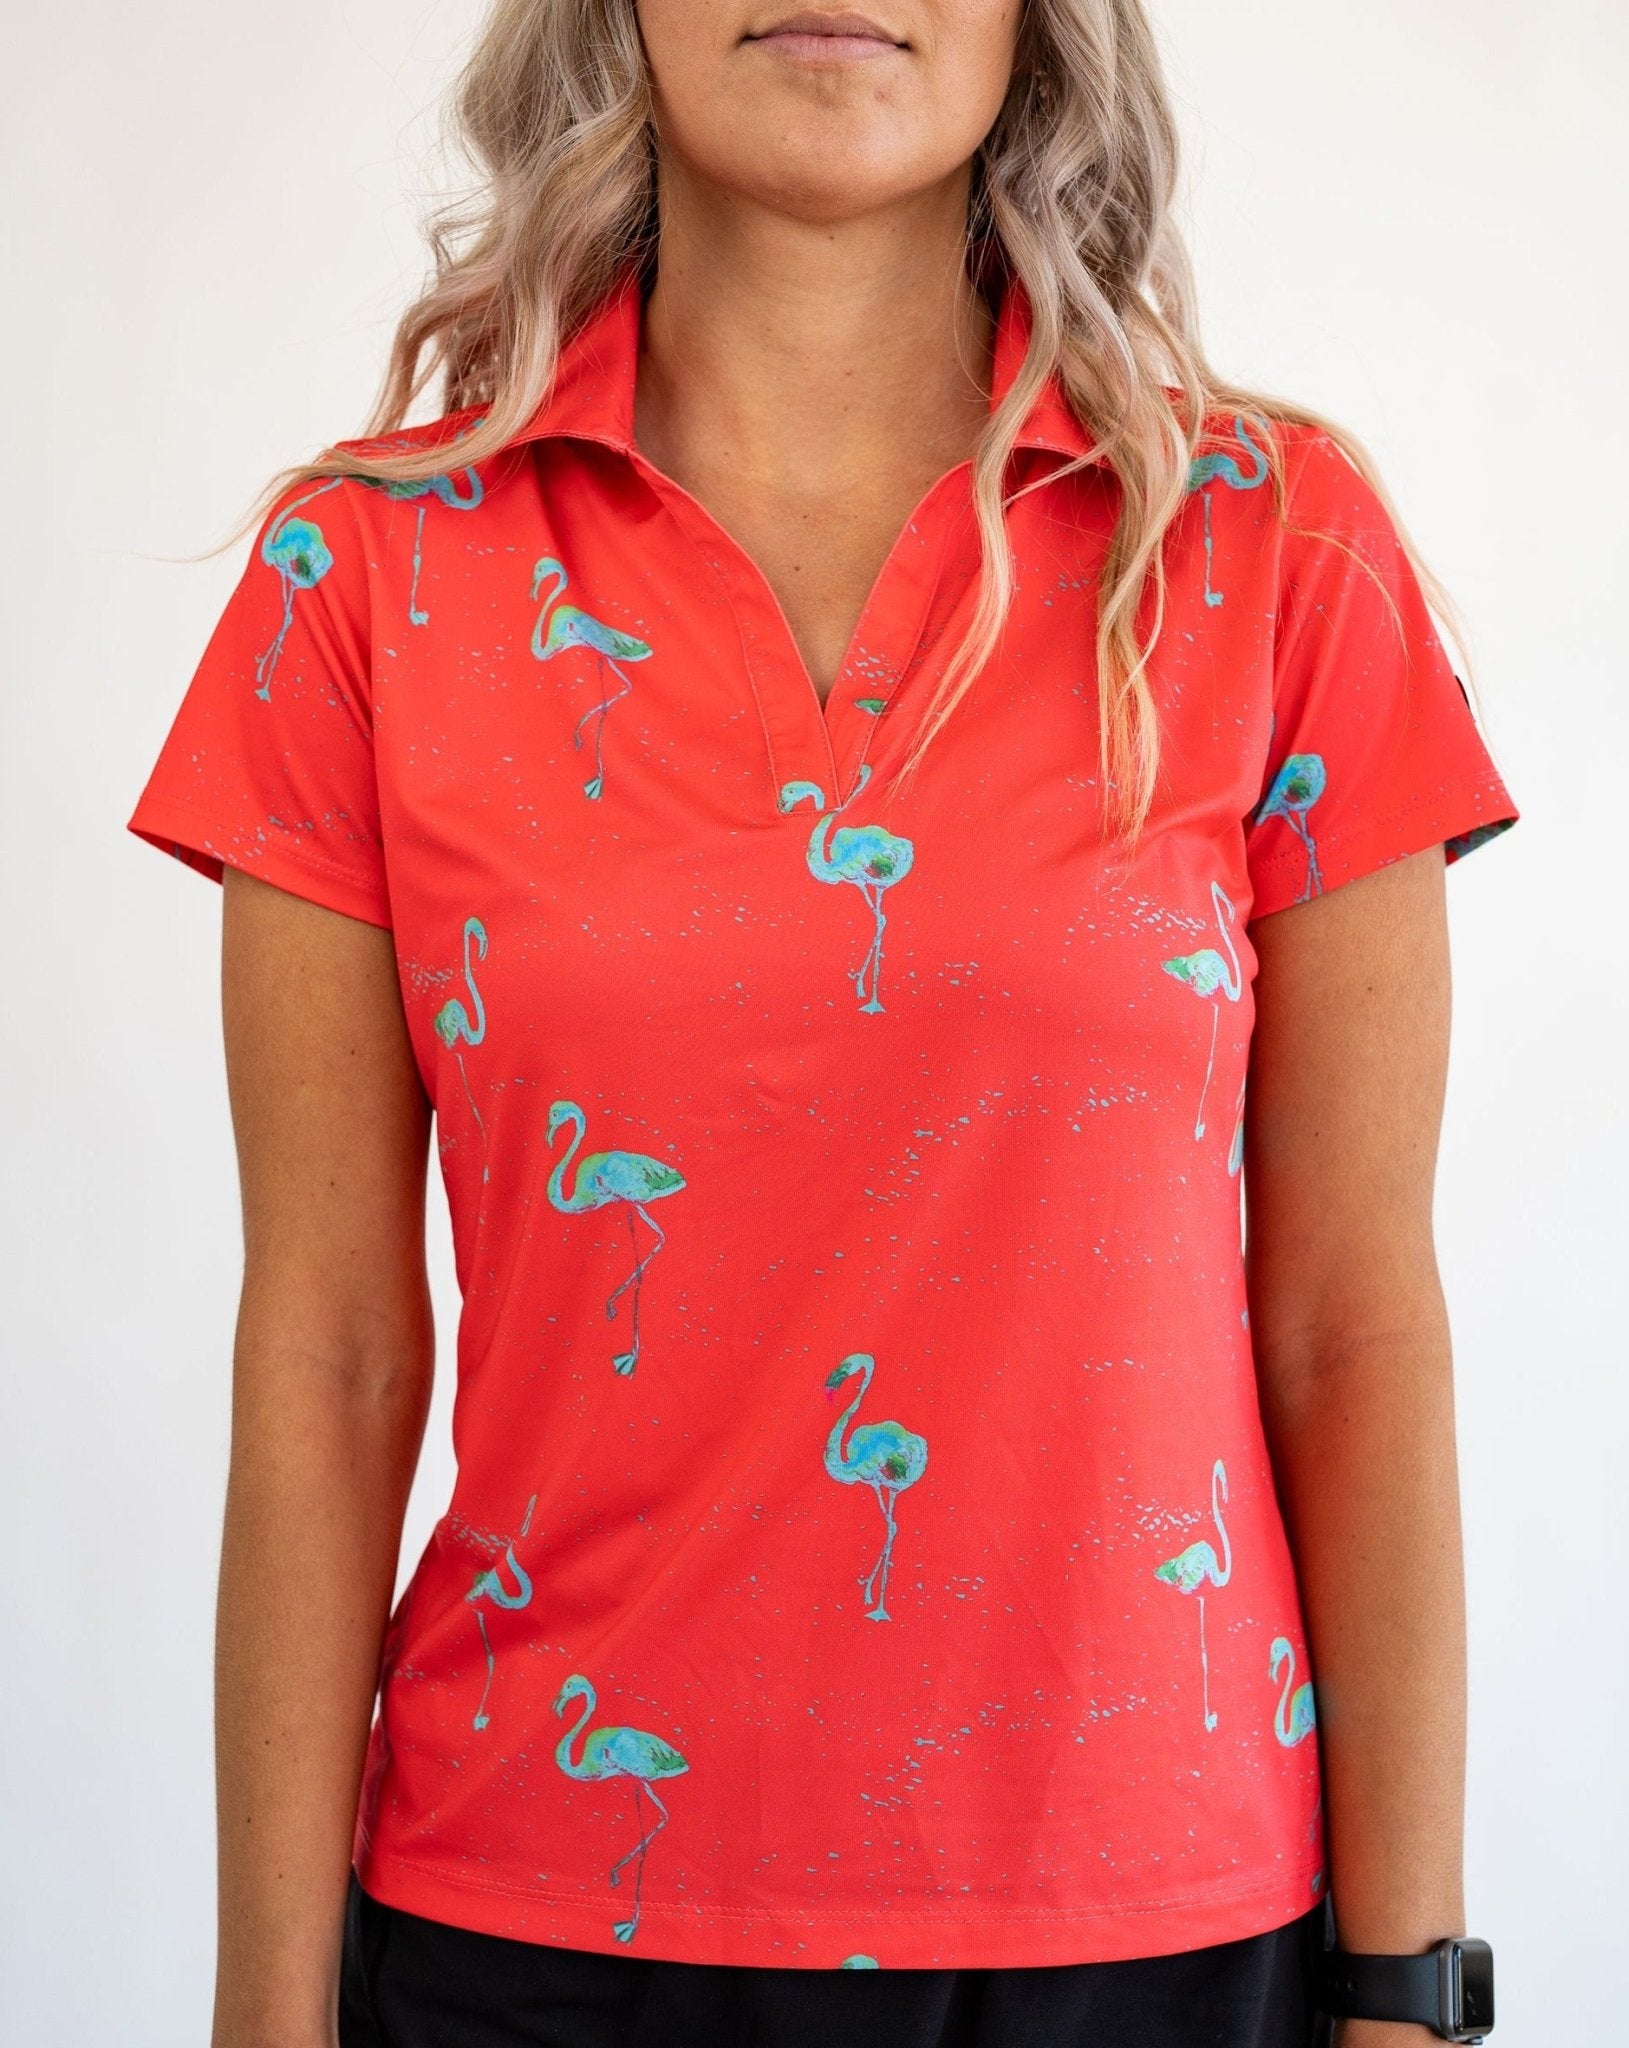 Womens Flamingo Golf Shirt - Just Beachy. Only $39.95. – Yatta Golf